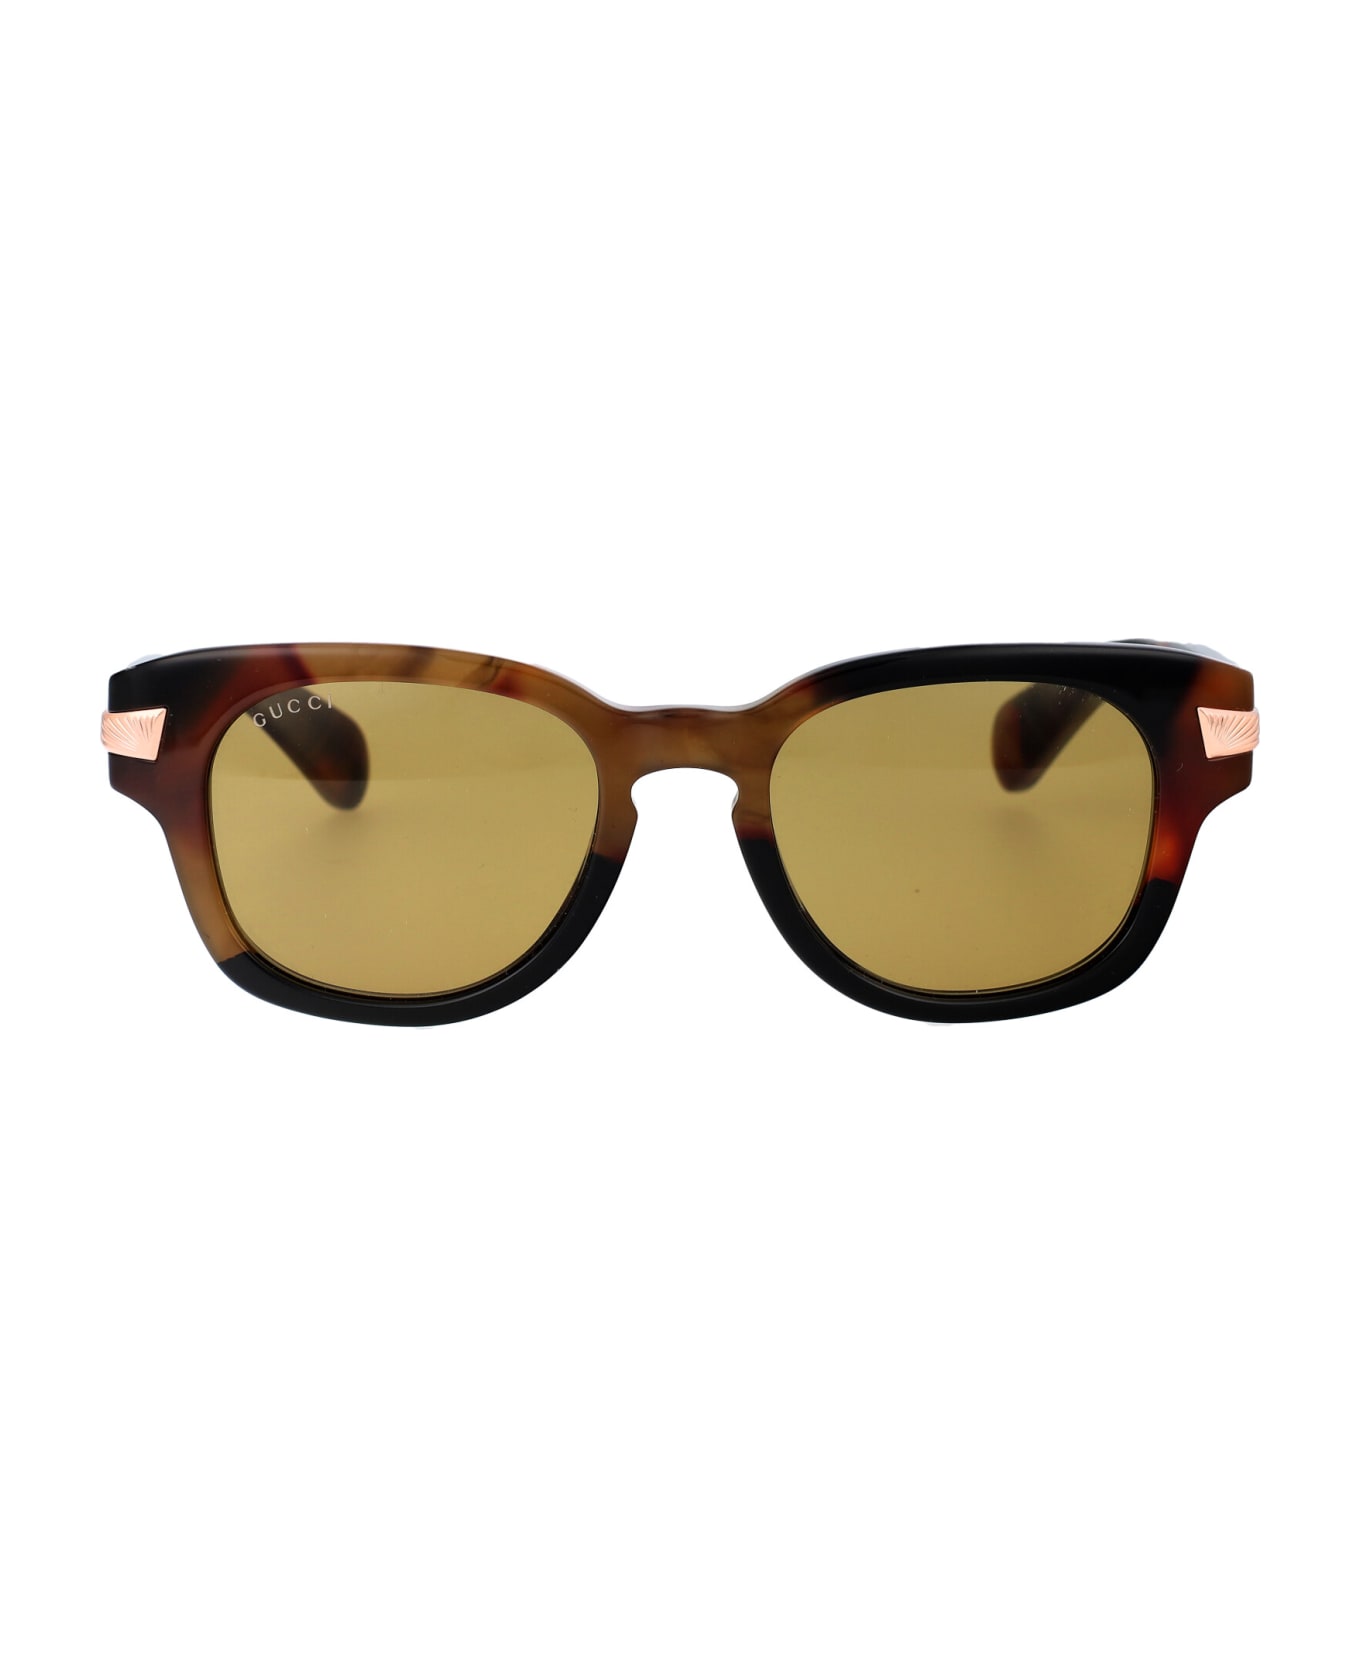 Gucci Eyewear Gg1518s Sunglasses - 003 HAVANA HAVANA BROWN